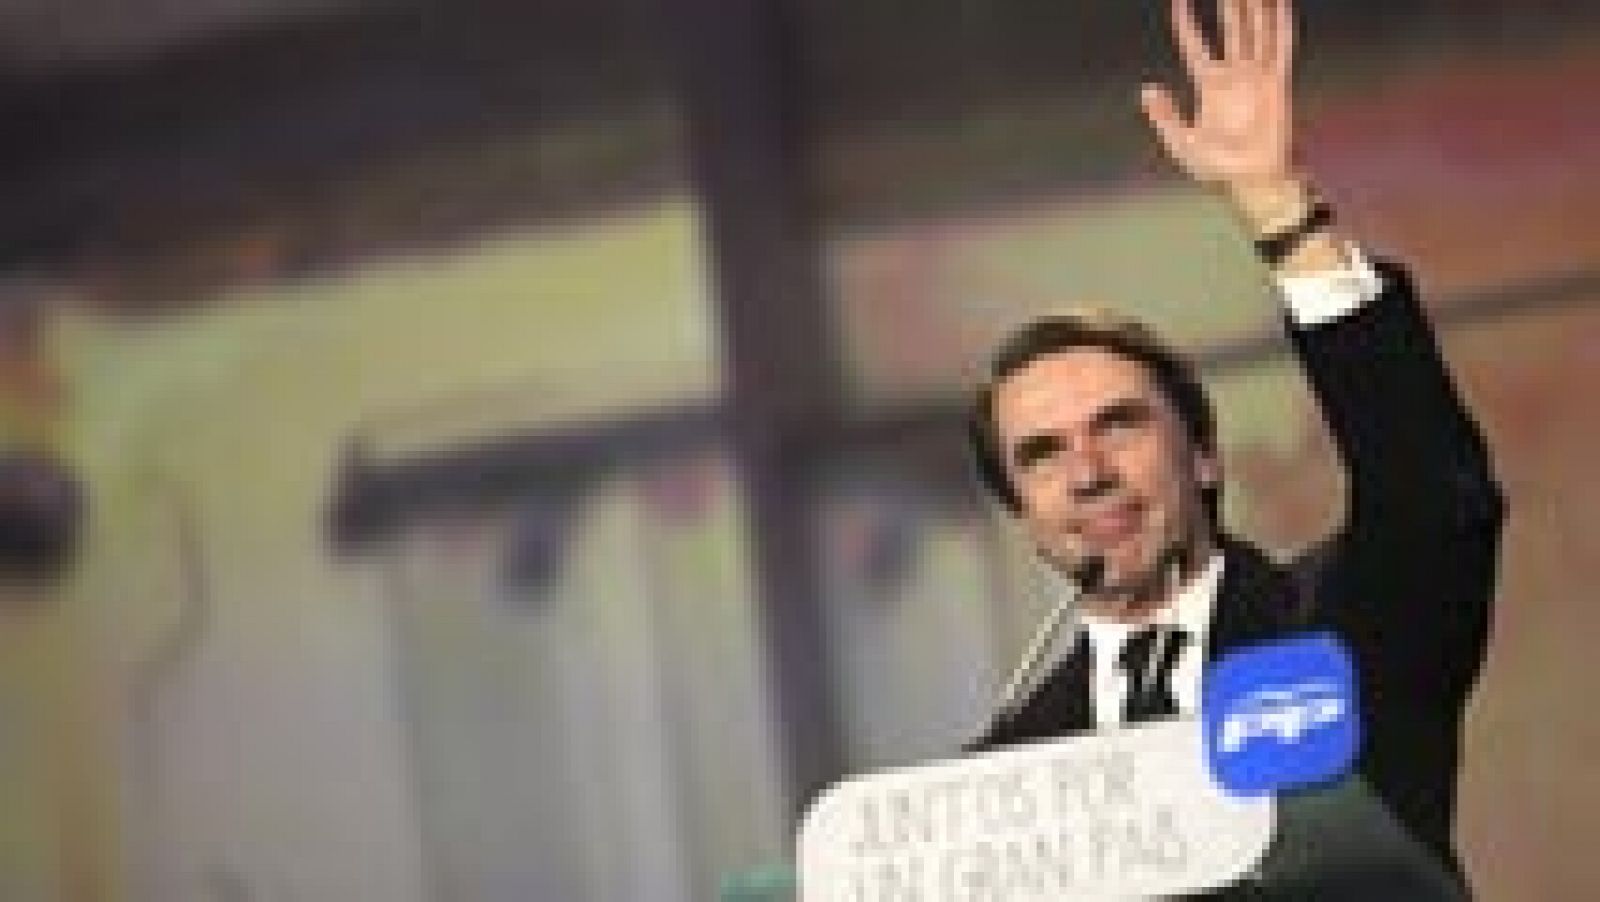 Telediario 1: Aznar: "No he vuelto de ninguna parte porque no me he ido" | RTVE Play